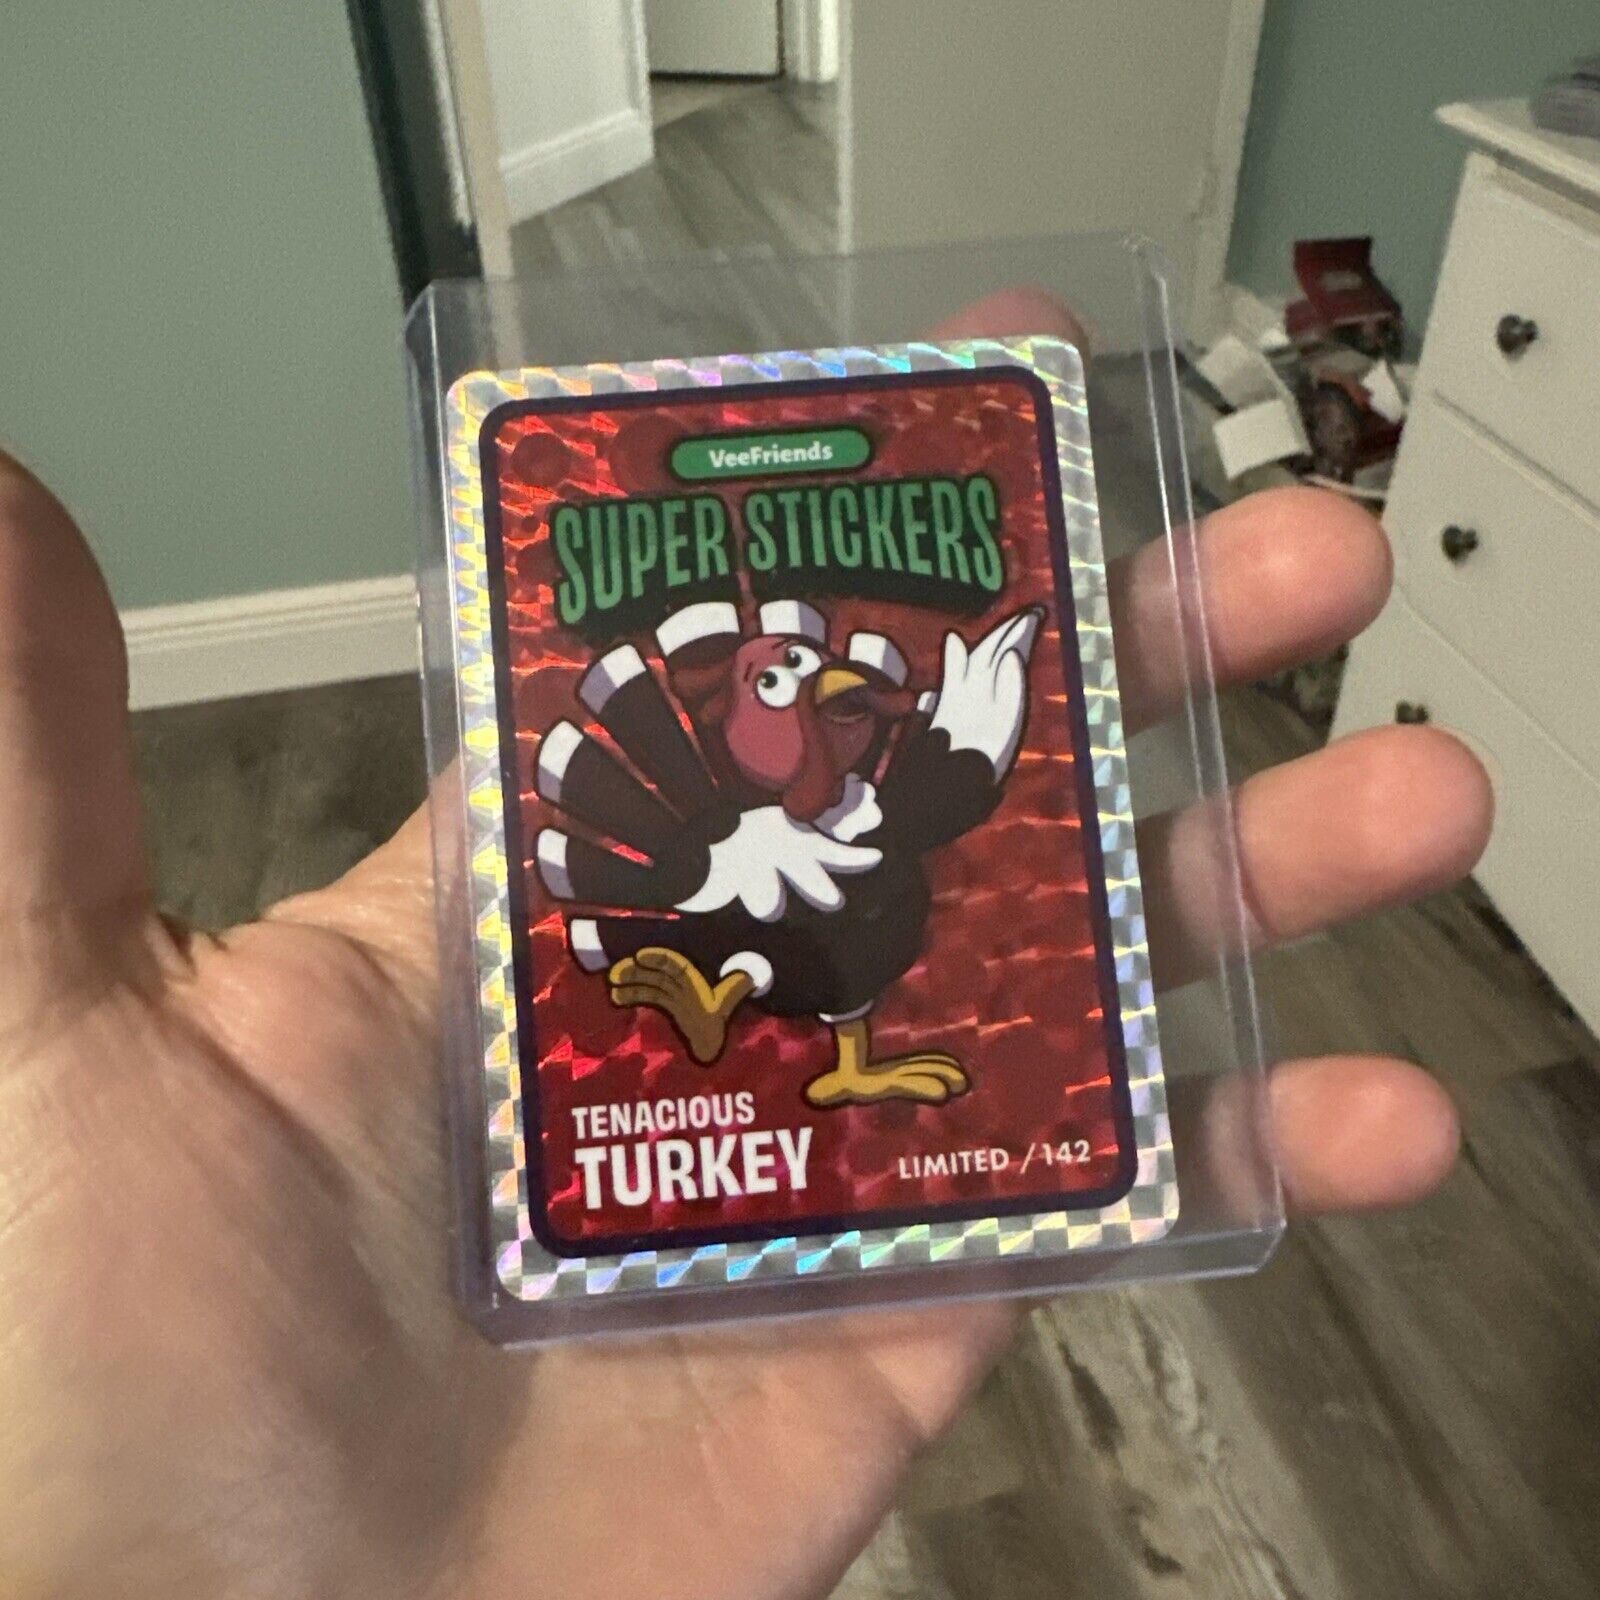 VeeFriends Super Stickers Tenacious Turkey Limited  /142 Cranberry Ice